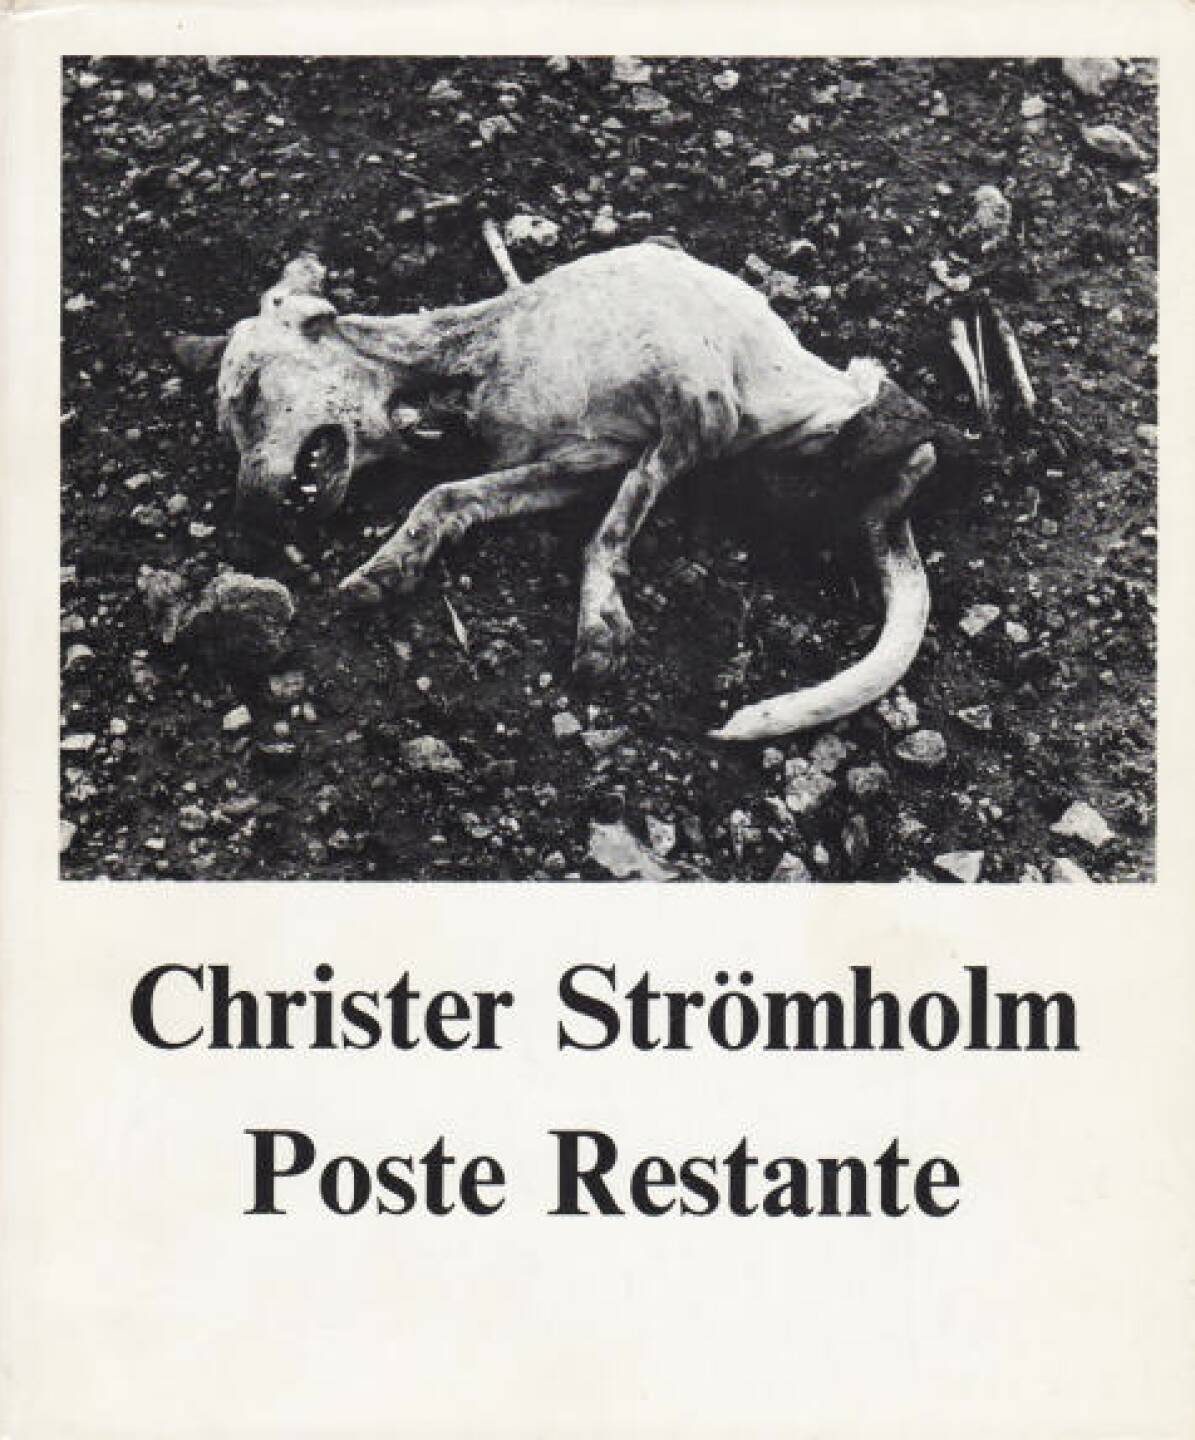 Christer Strömholm - Poste Restante, Preis: 500-1000 Euro, http://josefchladek.com/book/christer_stromholm_-_poste_restante